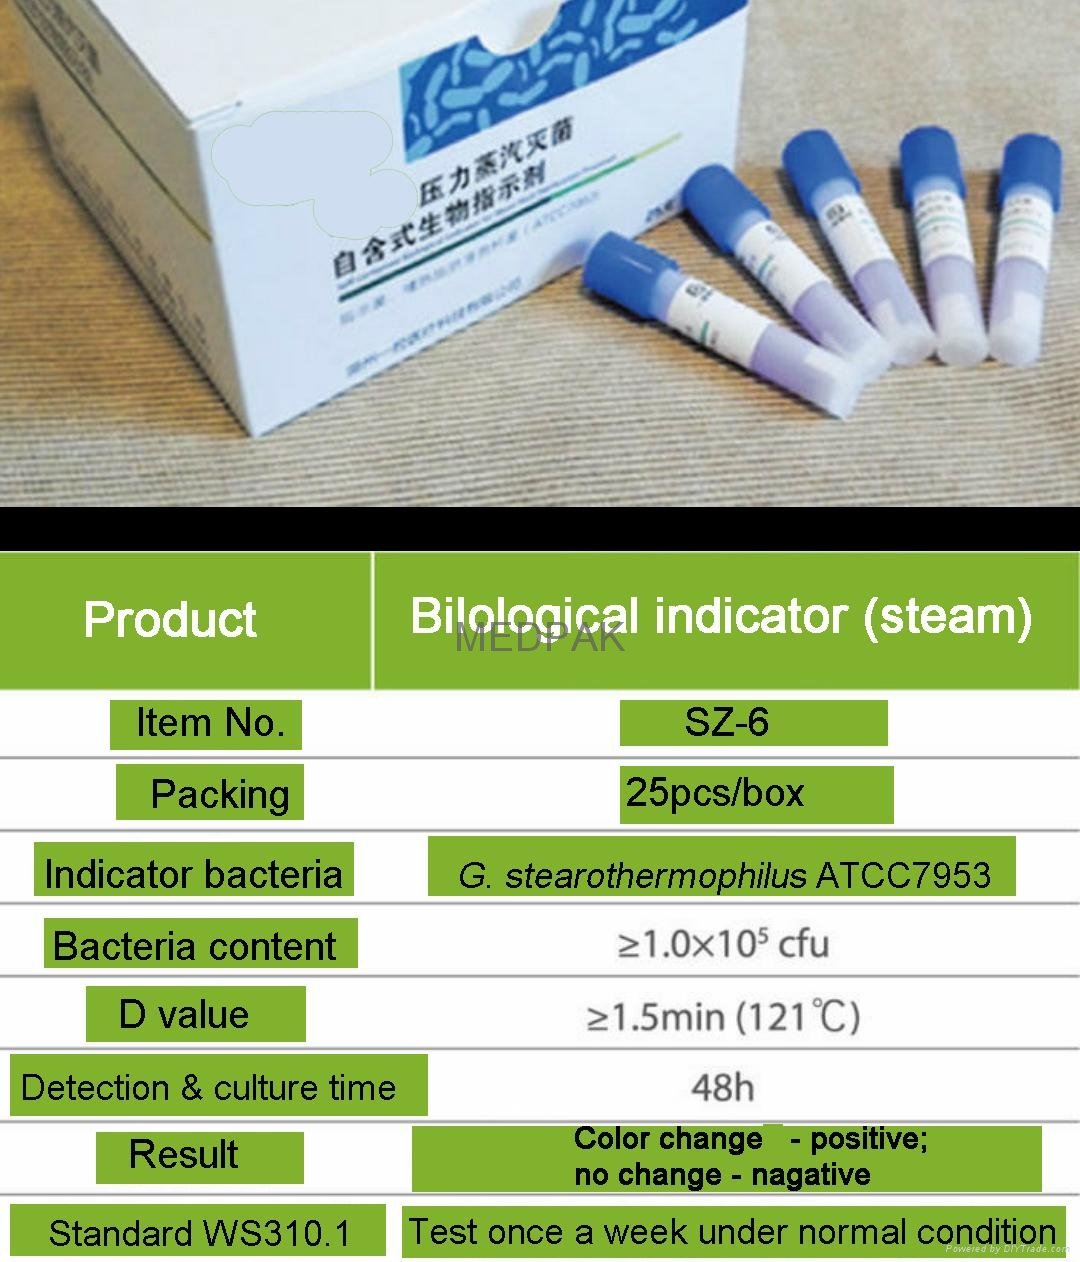 biological indicator (steam)